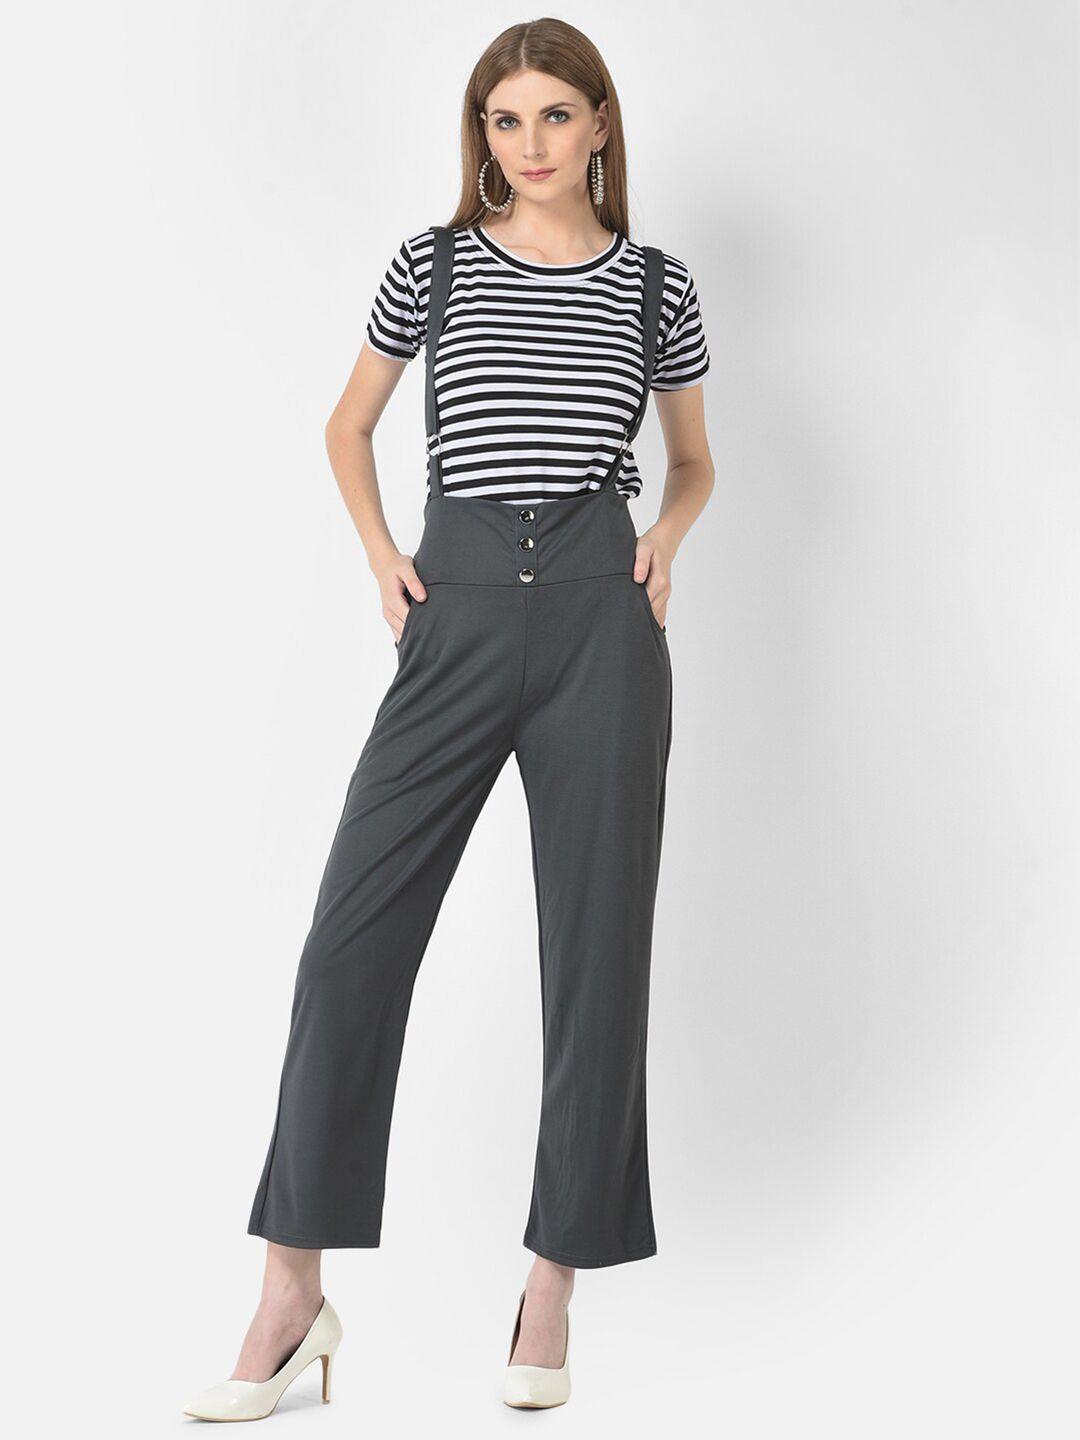 fnocks grey & white striped basic jumpsuit